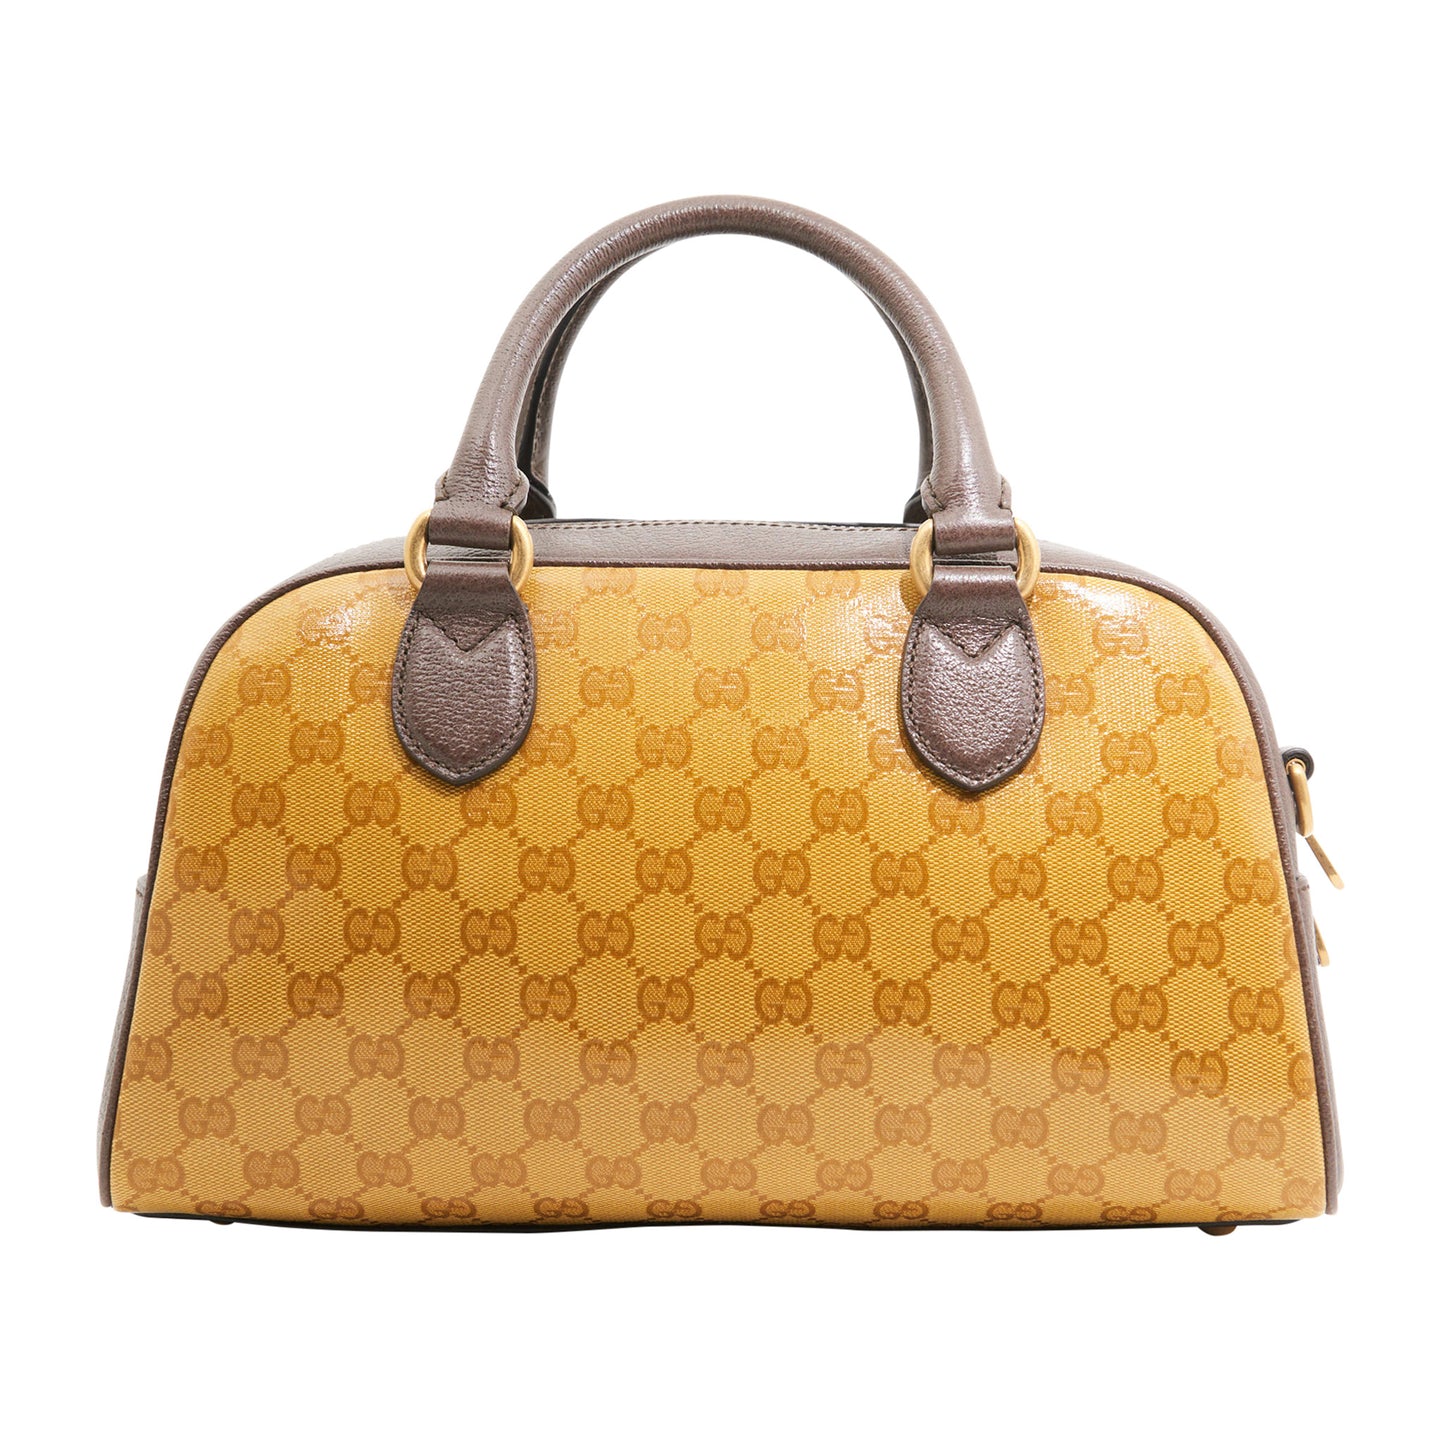 Gucci x Adidas Canvas Duffle Bag in Brown Monogram GHW